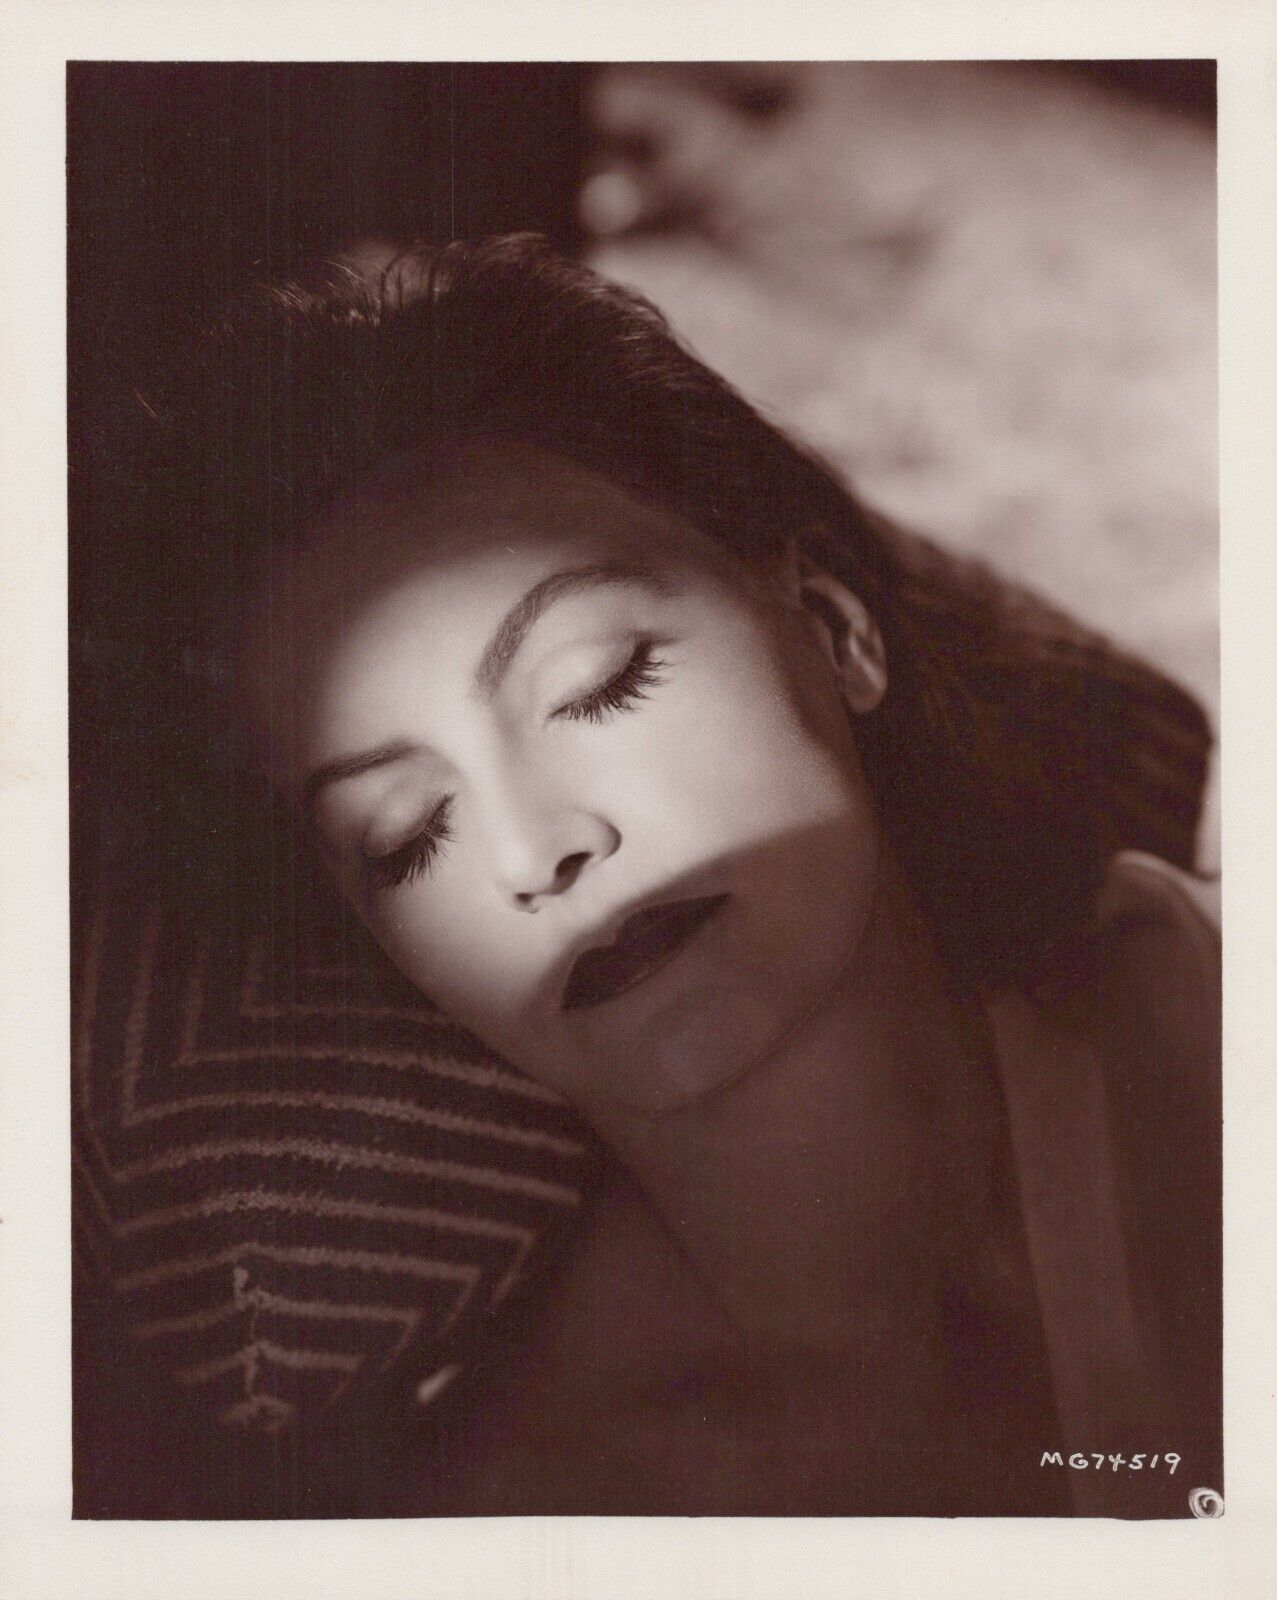 Greta Garbo (1970s) ❤🎬 Hollywood Beauty - Stunning Portrait Photo K 417